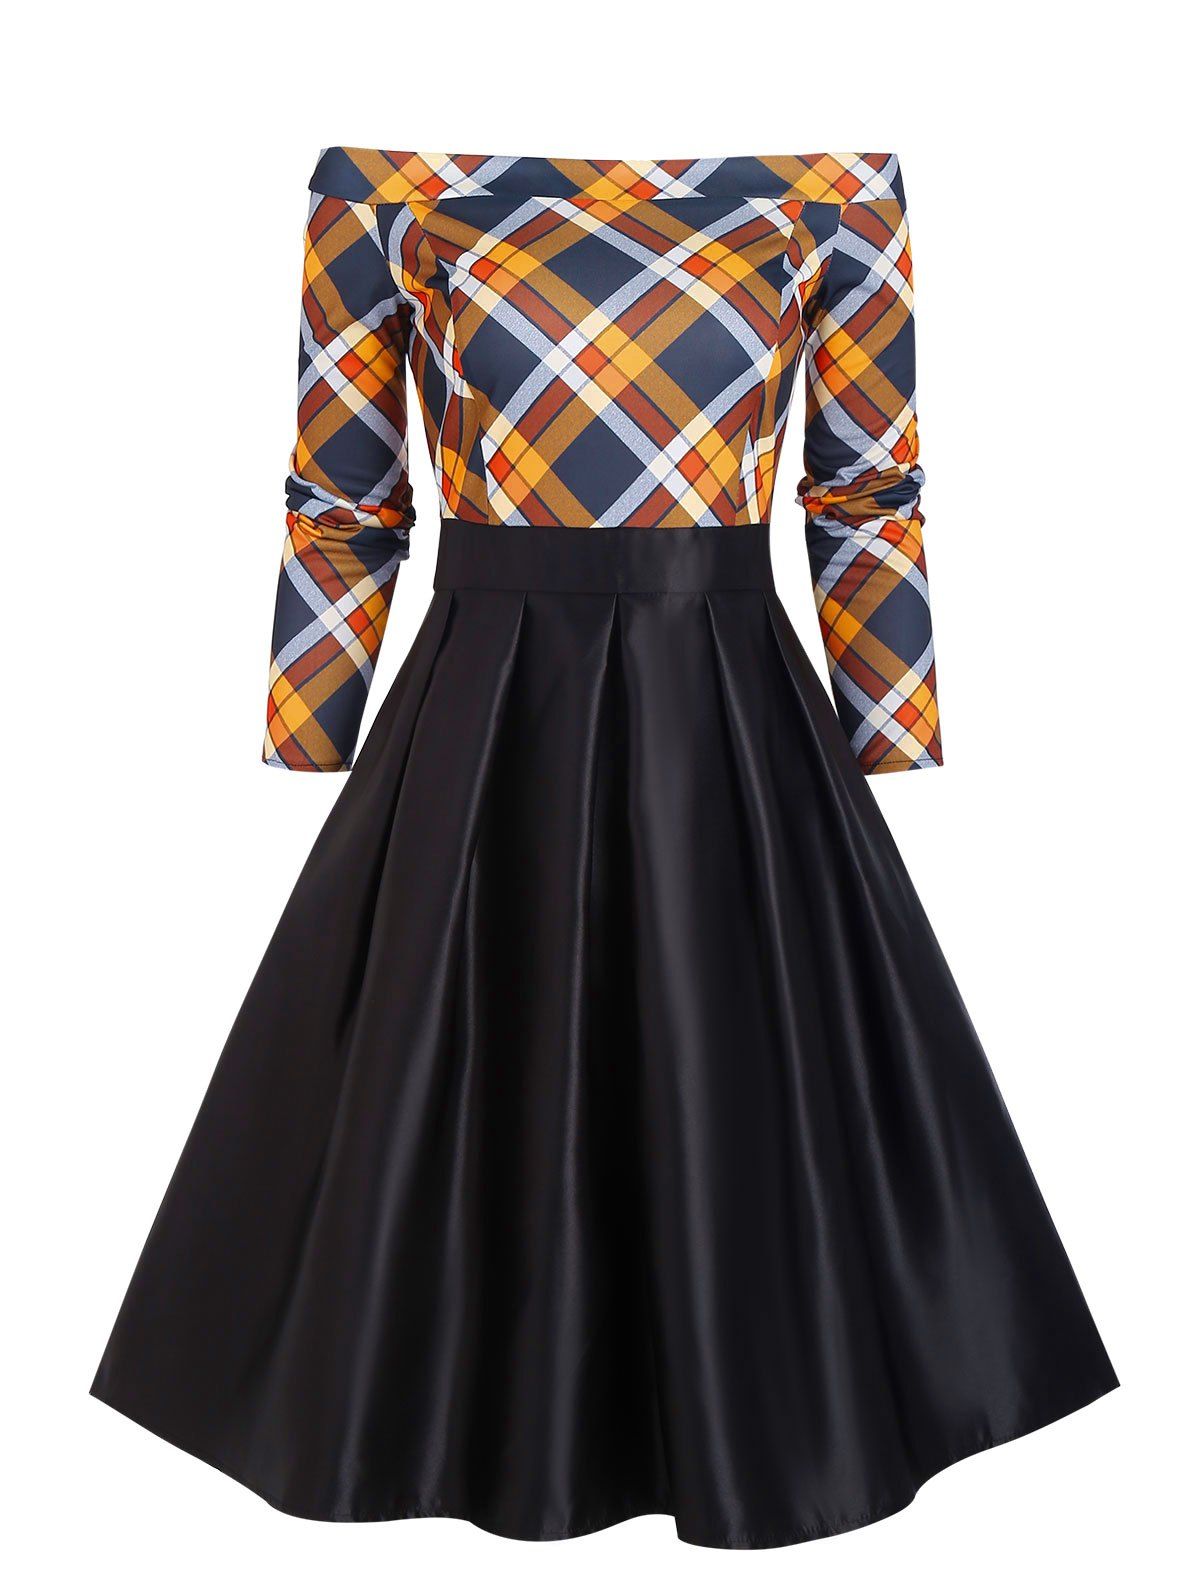 Plaid Print Vintage Dress Off The Shoulder Dress Long Sleeve Pleated Detail A Line Dress 